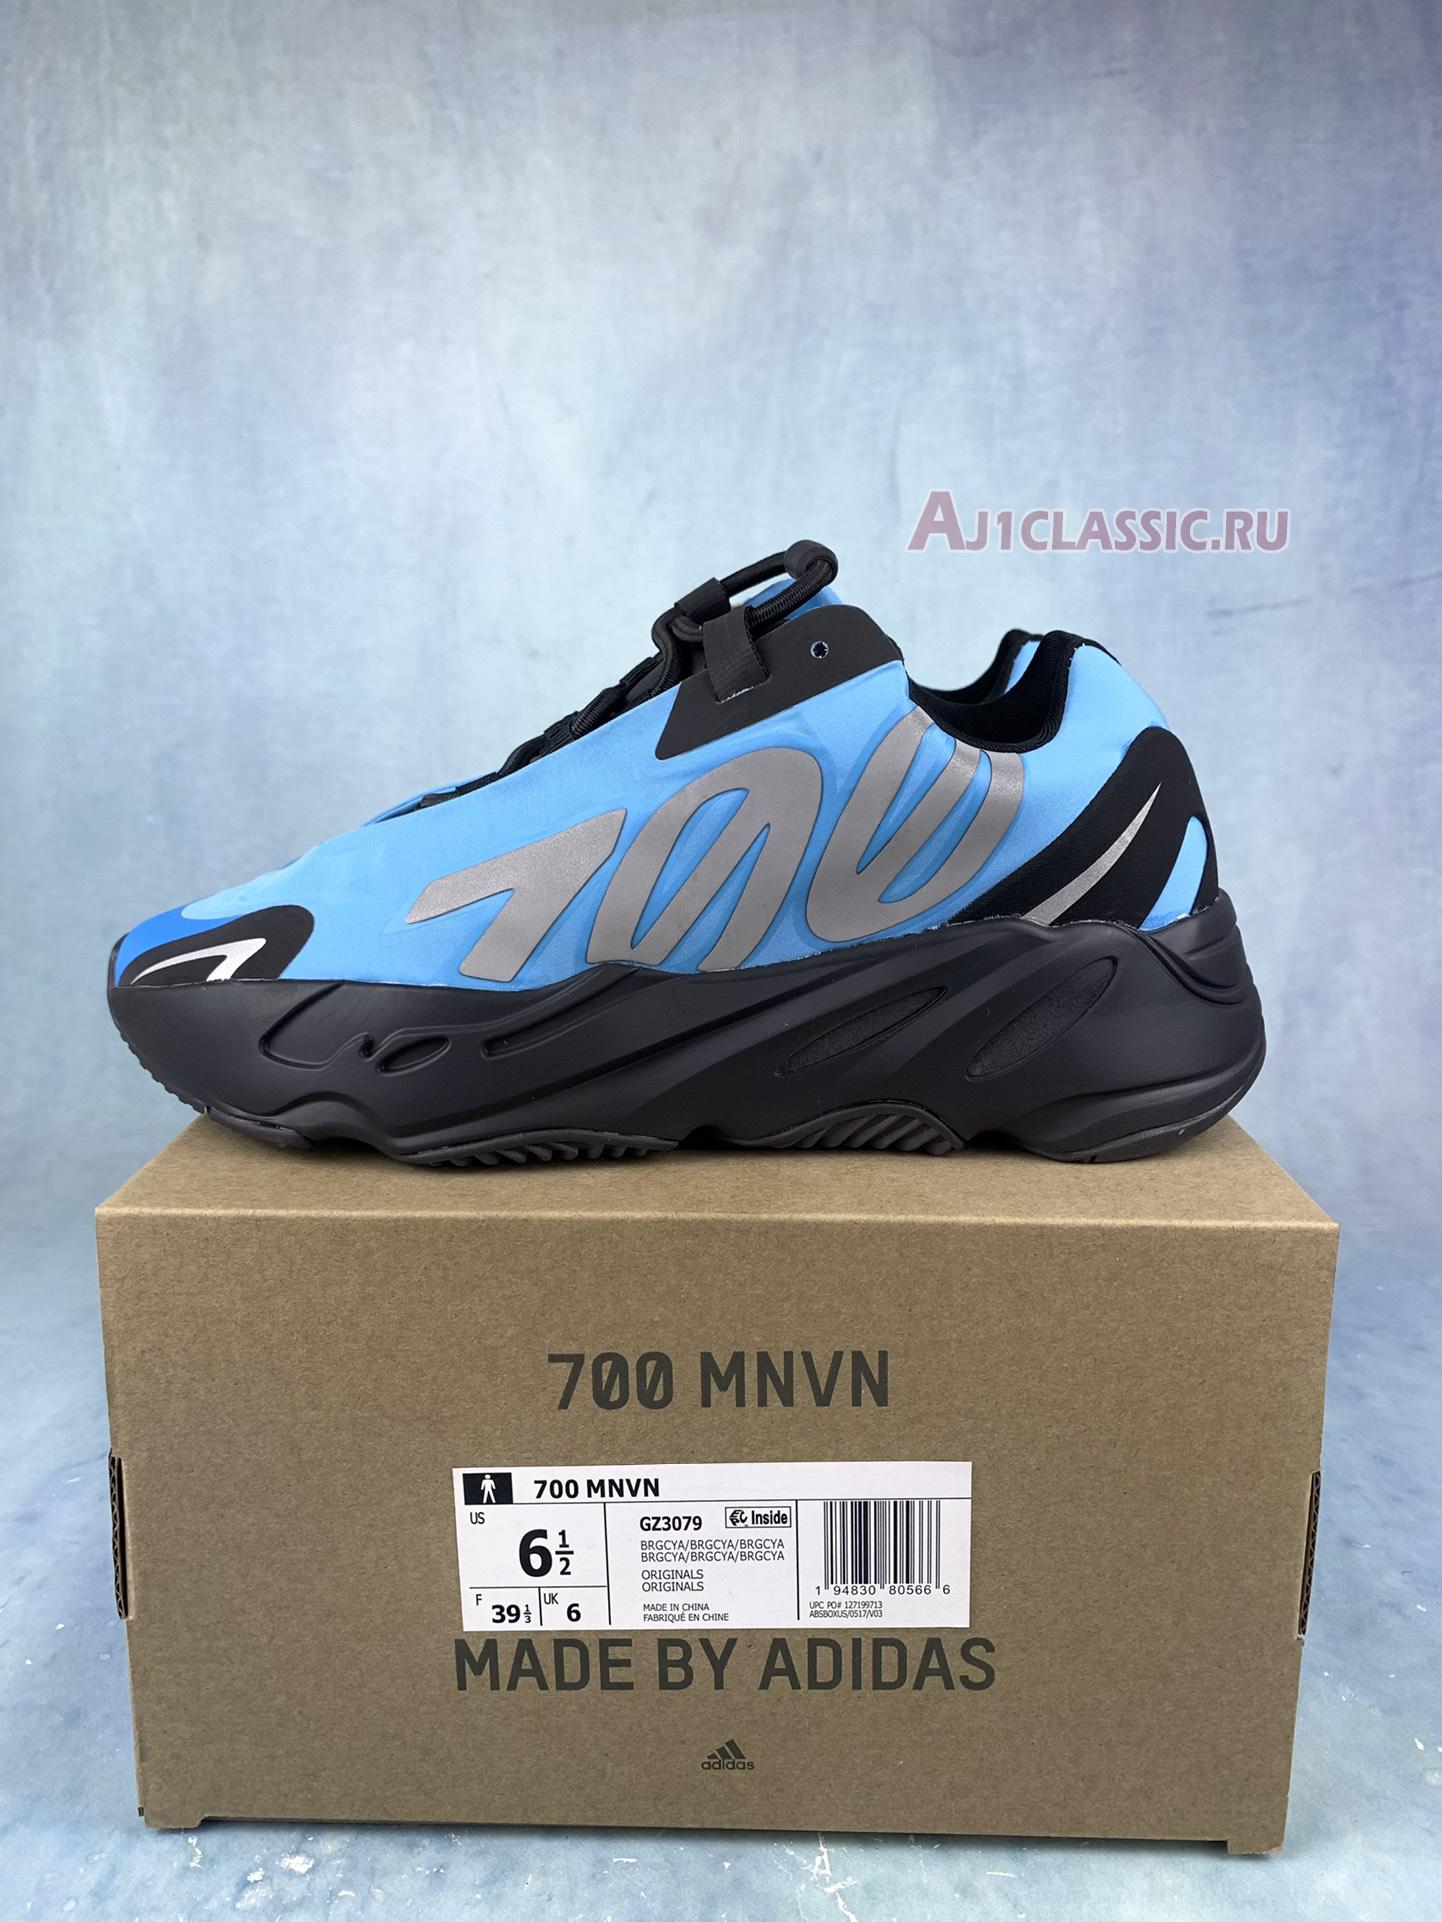 Adidas Yeezy Boost 700 MNVN "Bright Cyan" GZ3079